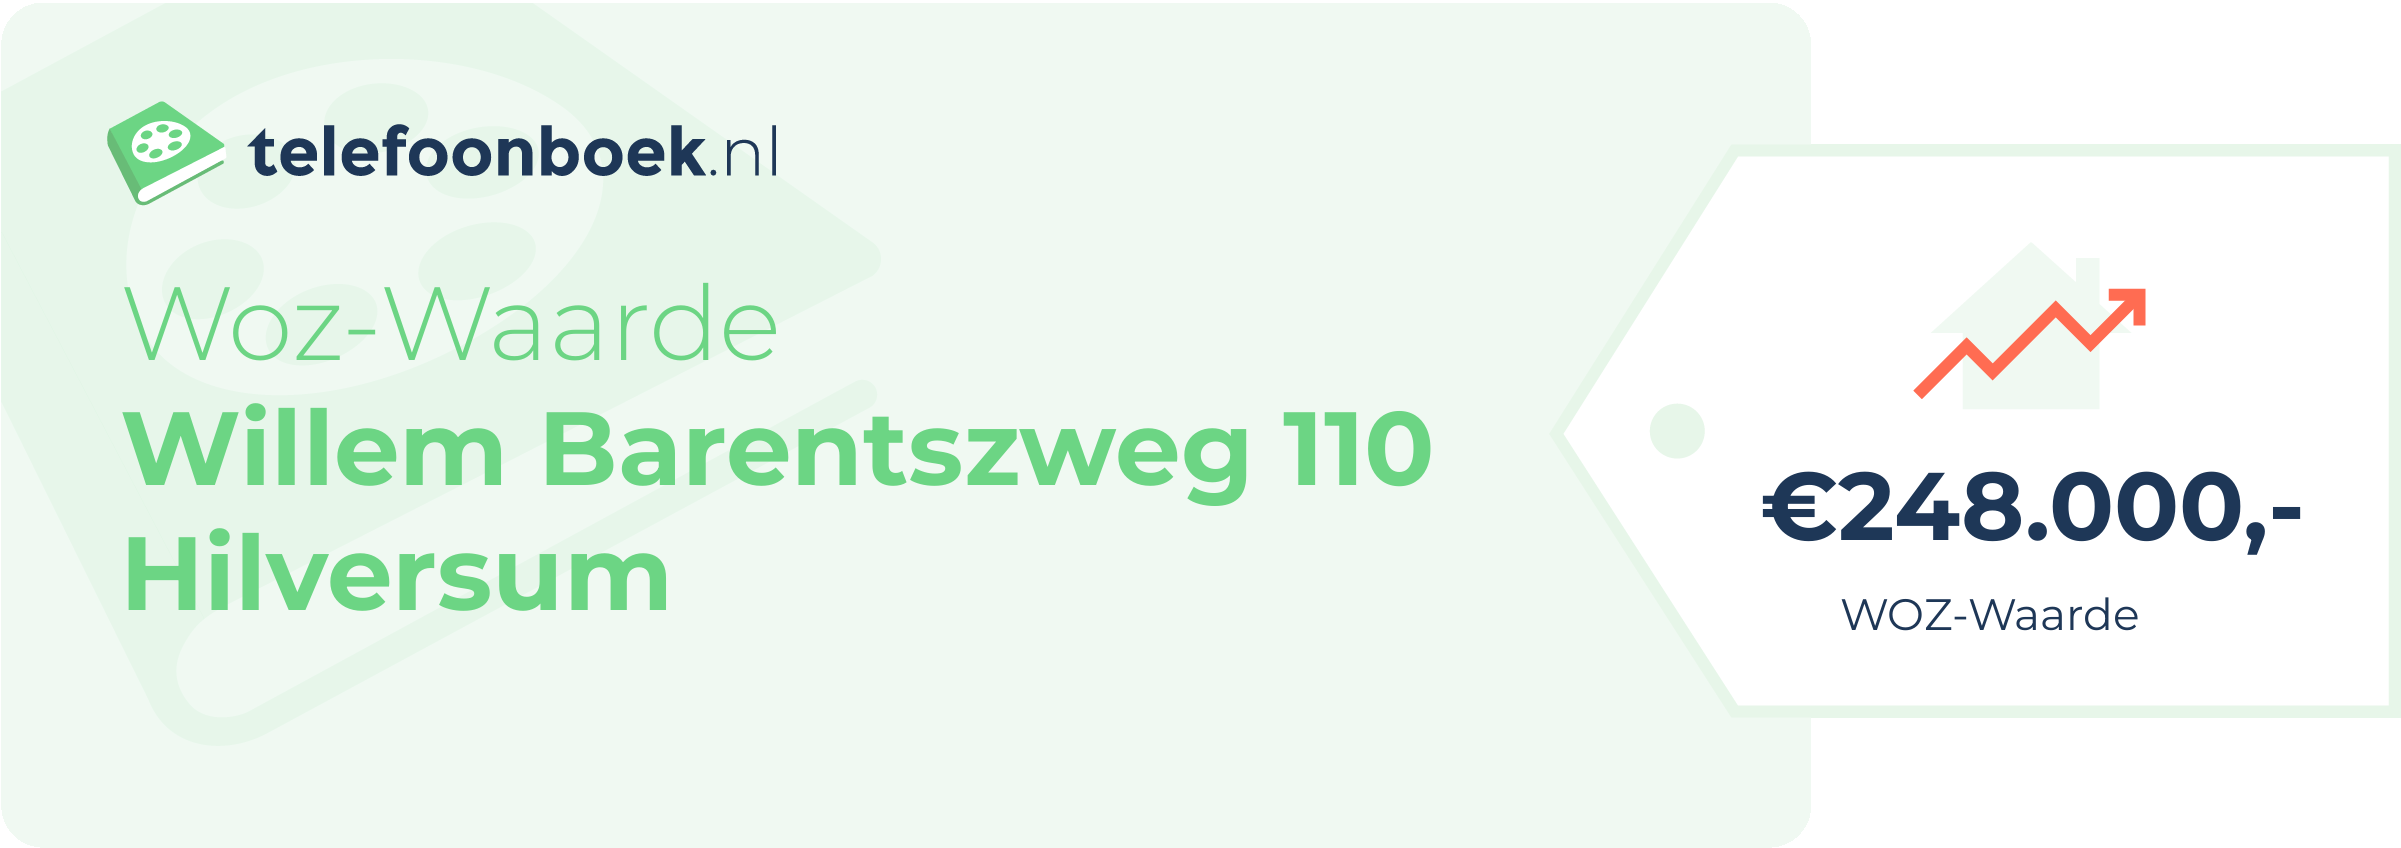 WOZ-waarde Willem Barentszweg 110 Hilversum